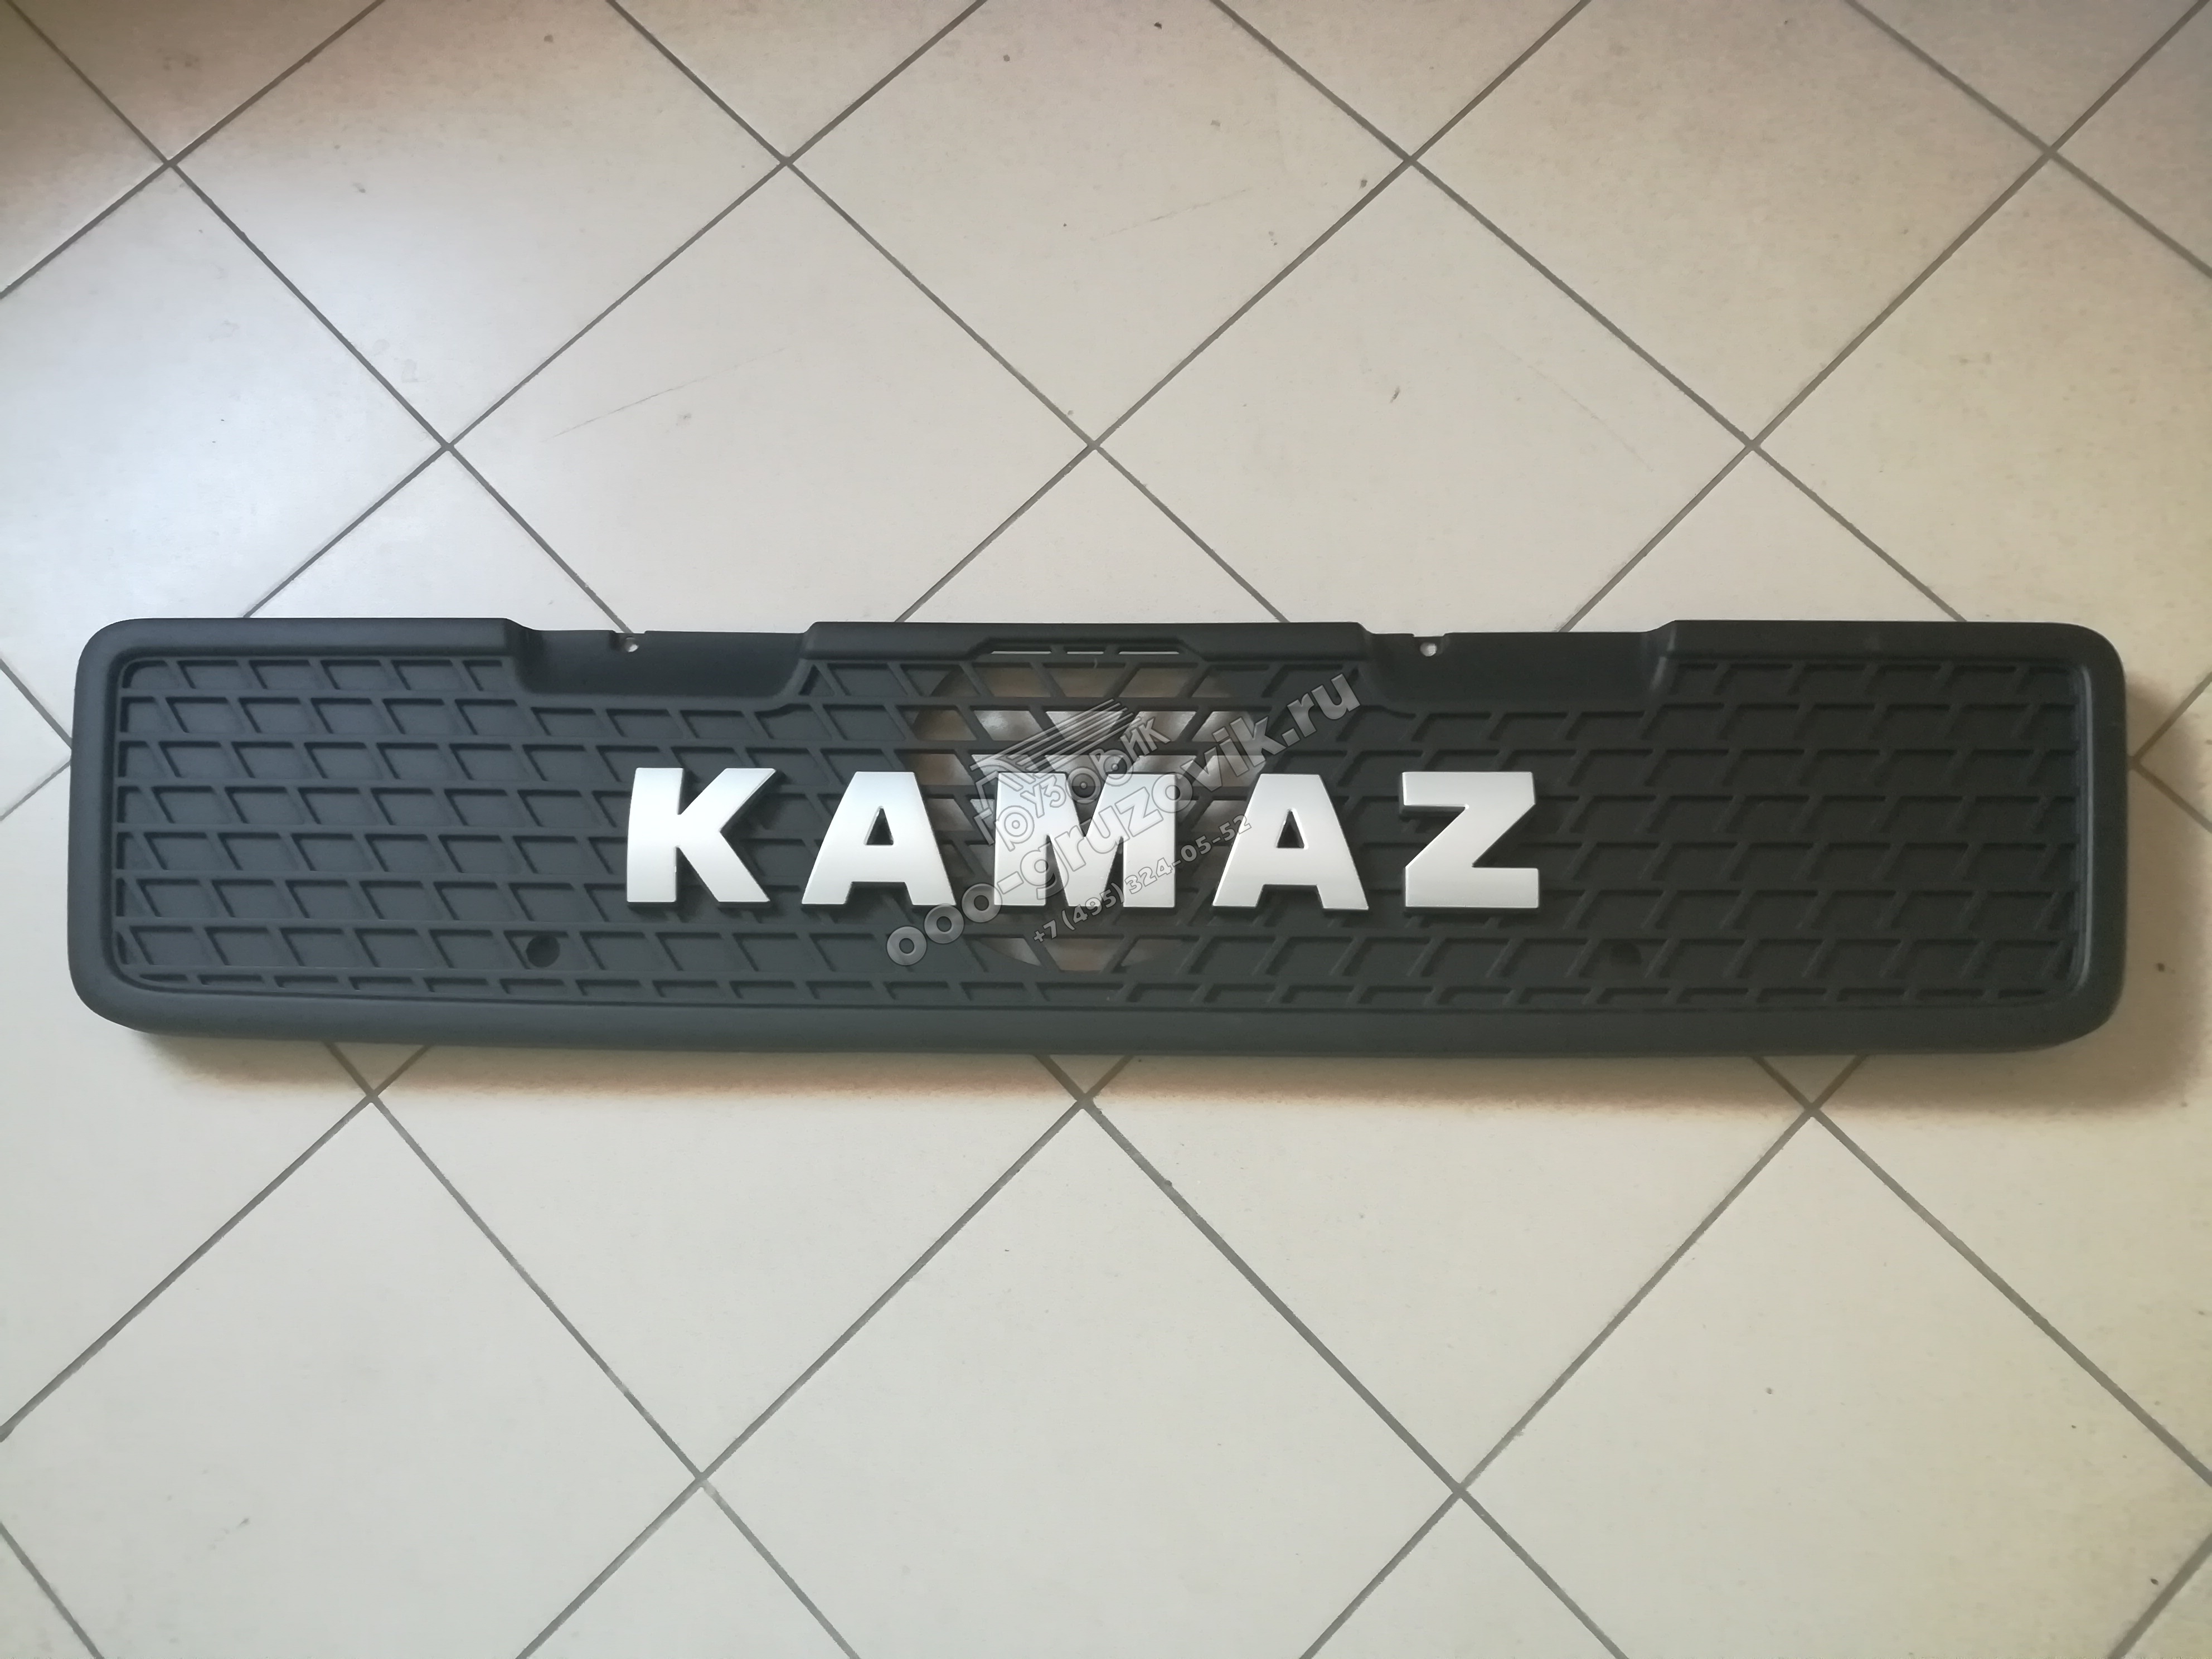 Решетка радиатора КАМАЗ-5490 с логотипом "ПАО КАМАЗ", артикул: 5490-8401310